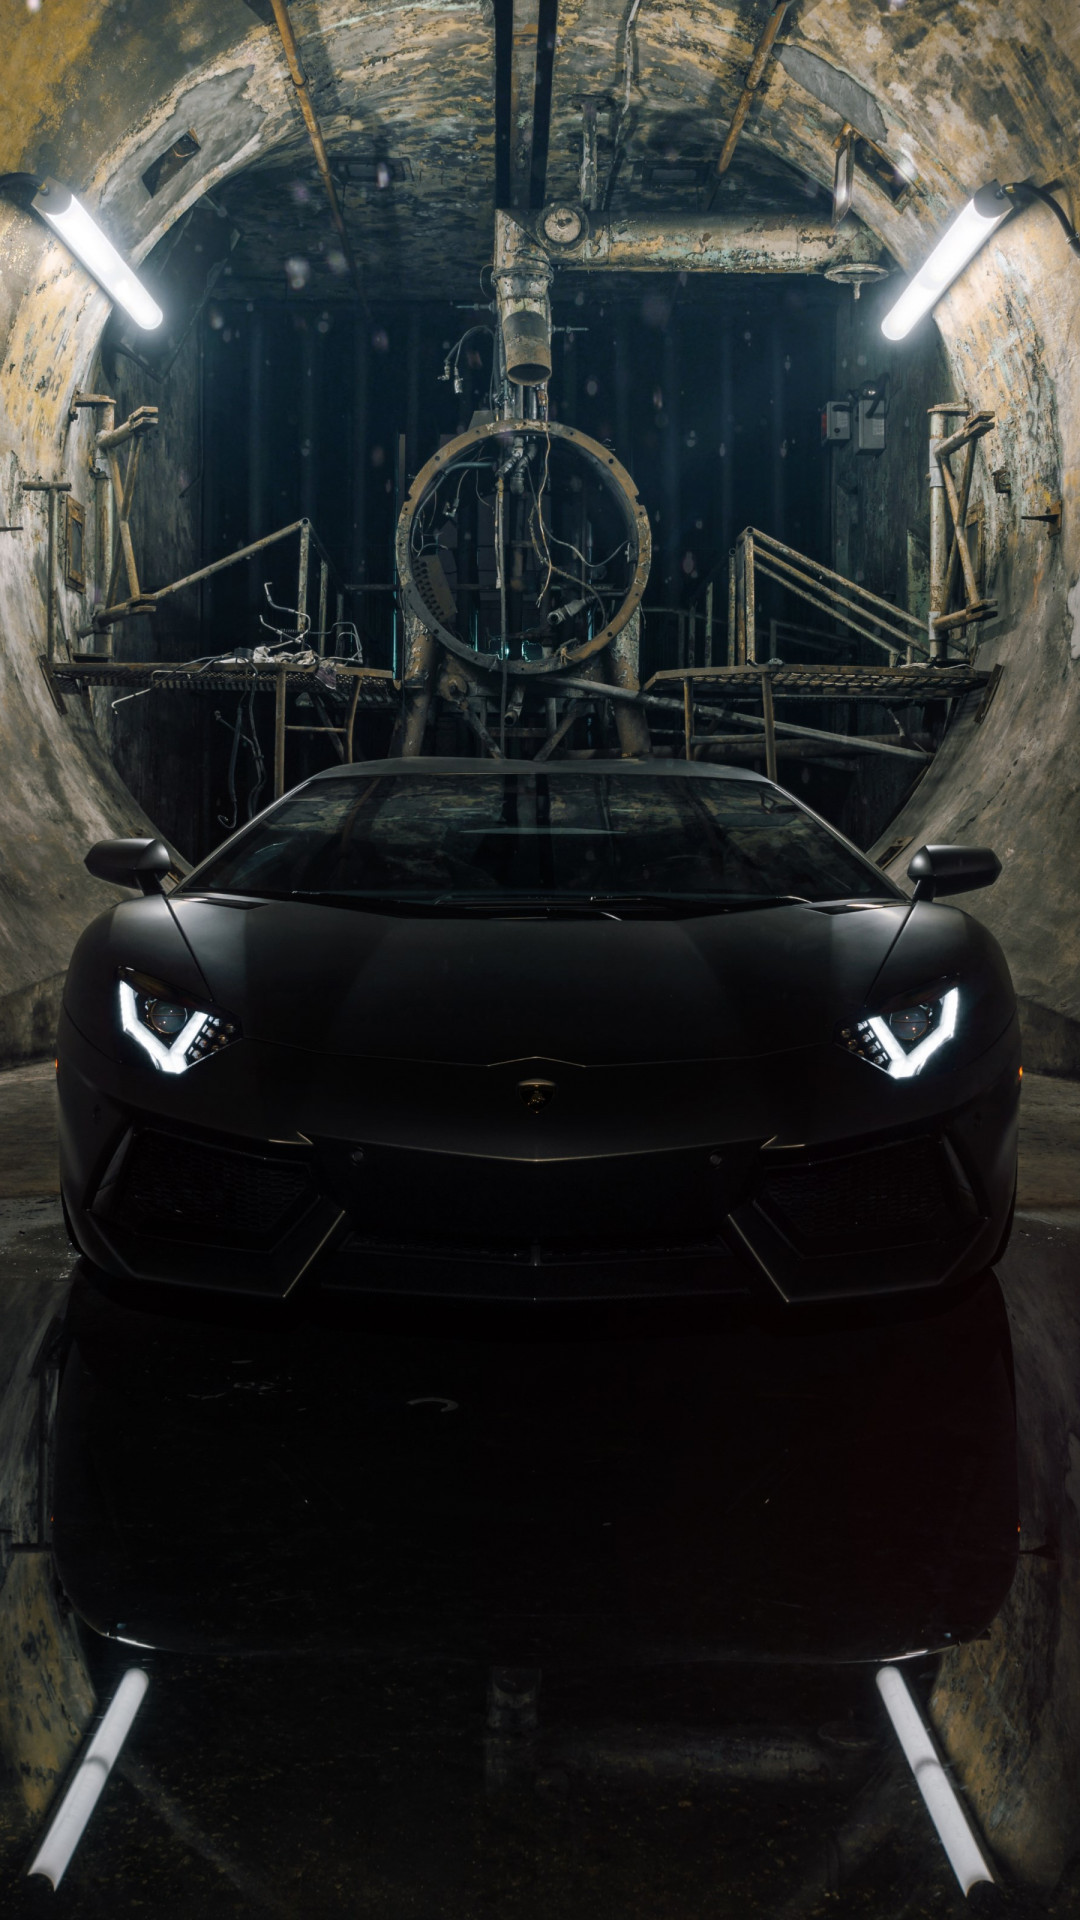 Download wallpaper: Lamborghini Aventador 1080x1920